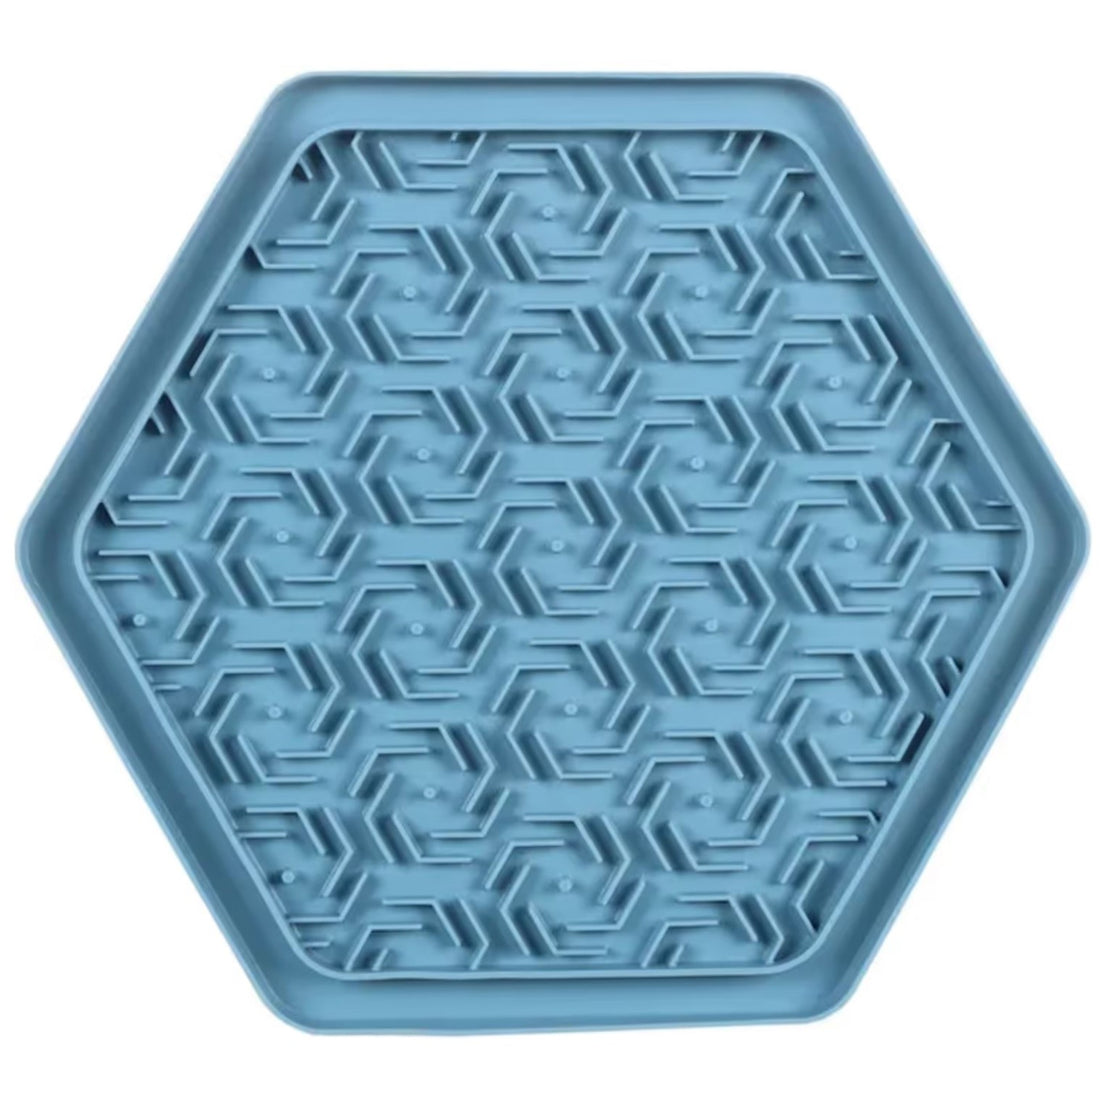 Hexagon Licky Pad *NEW*